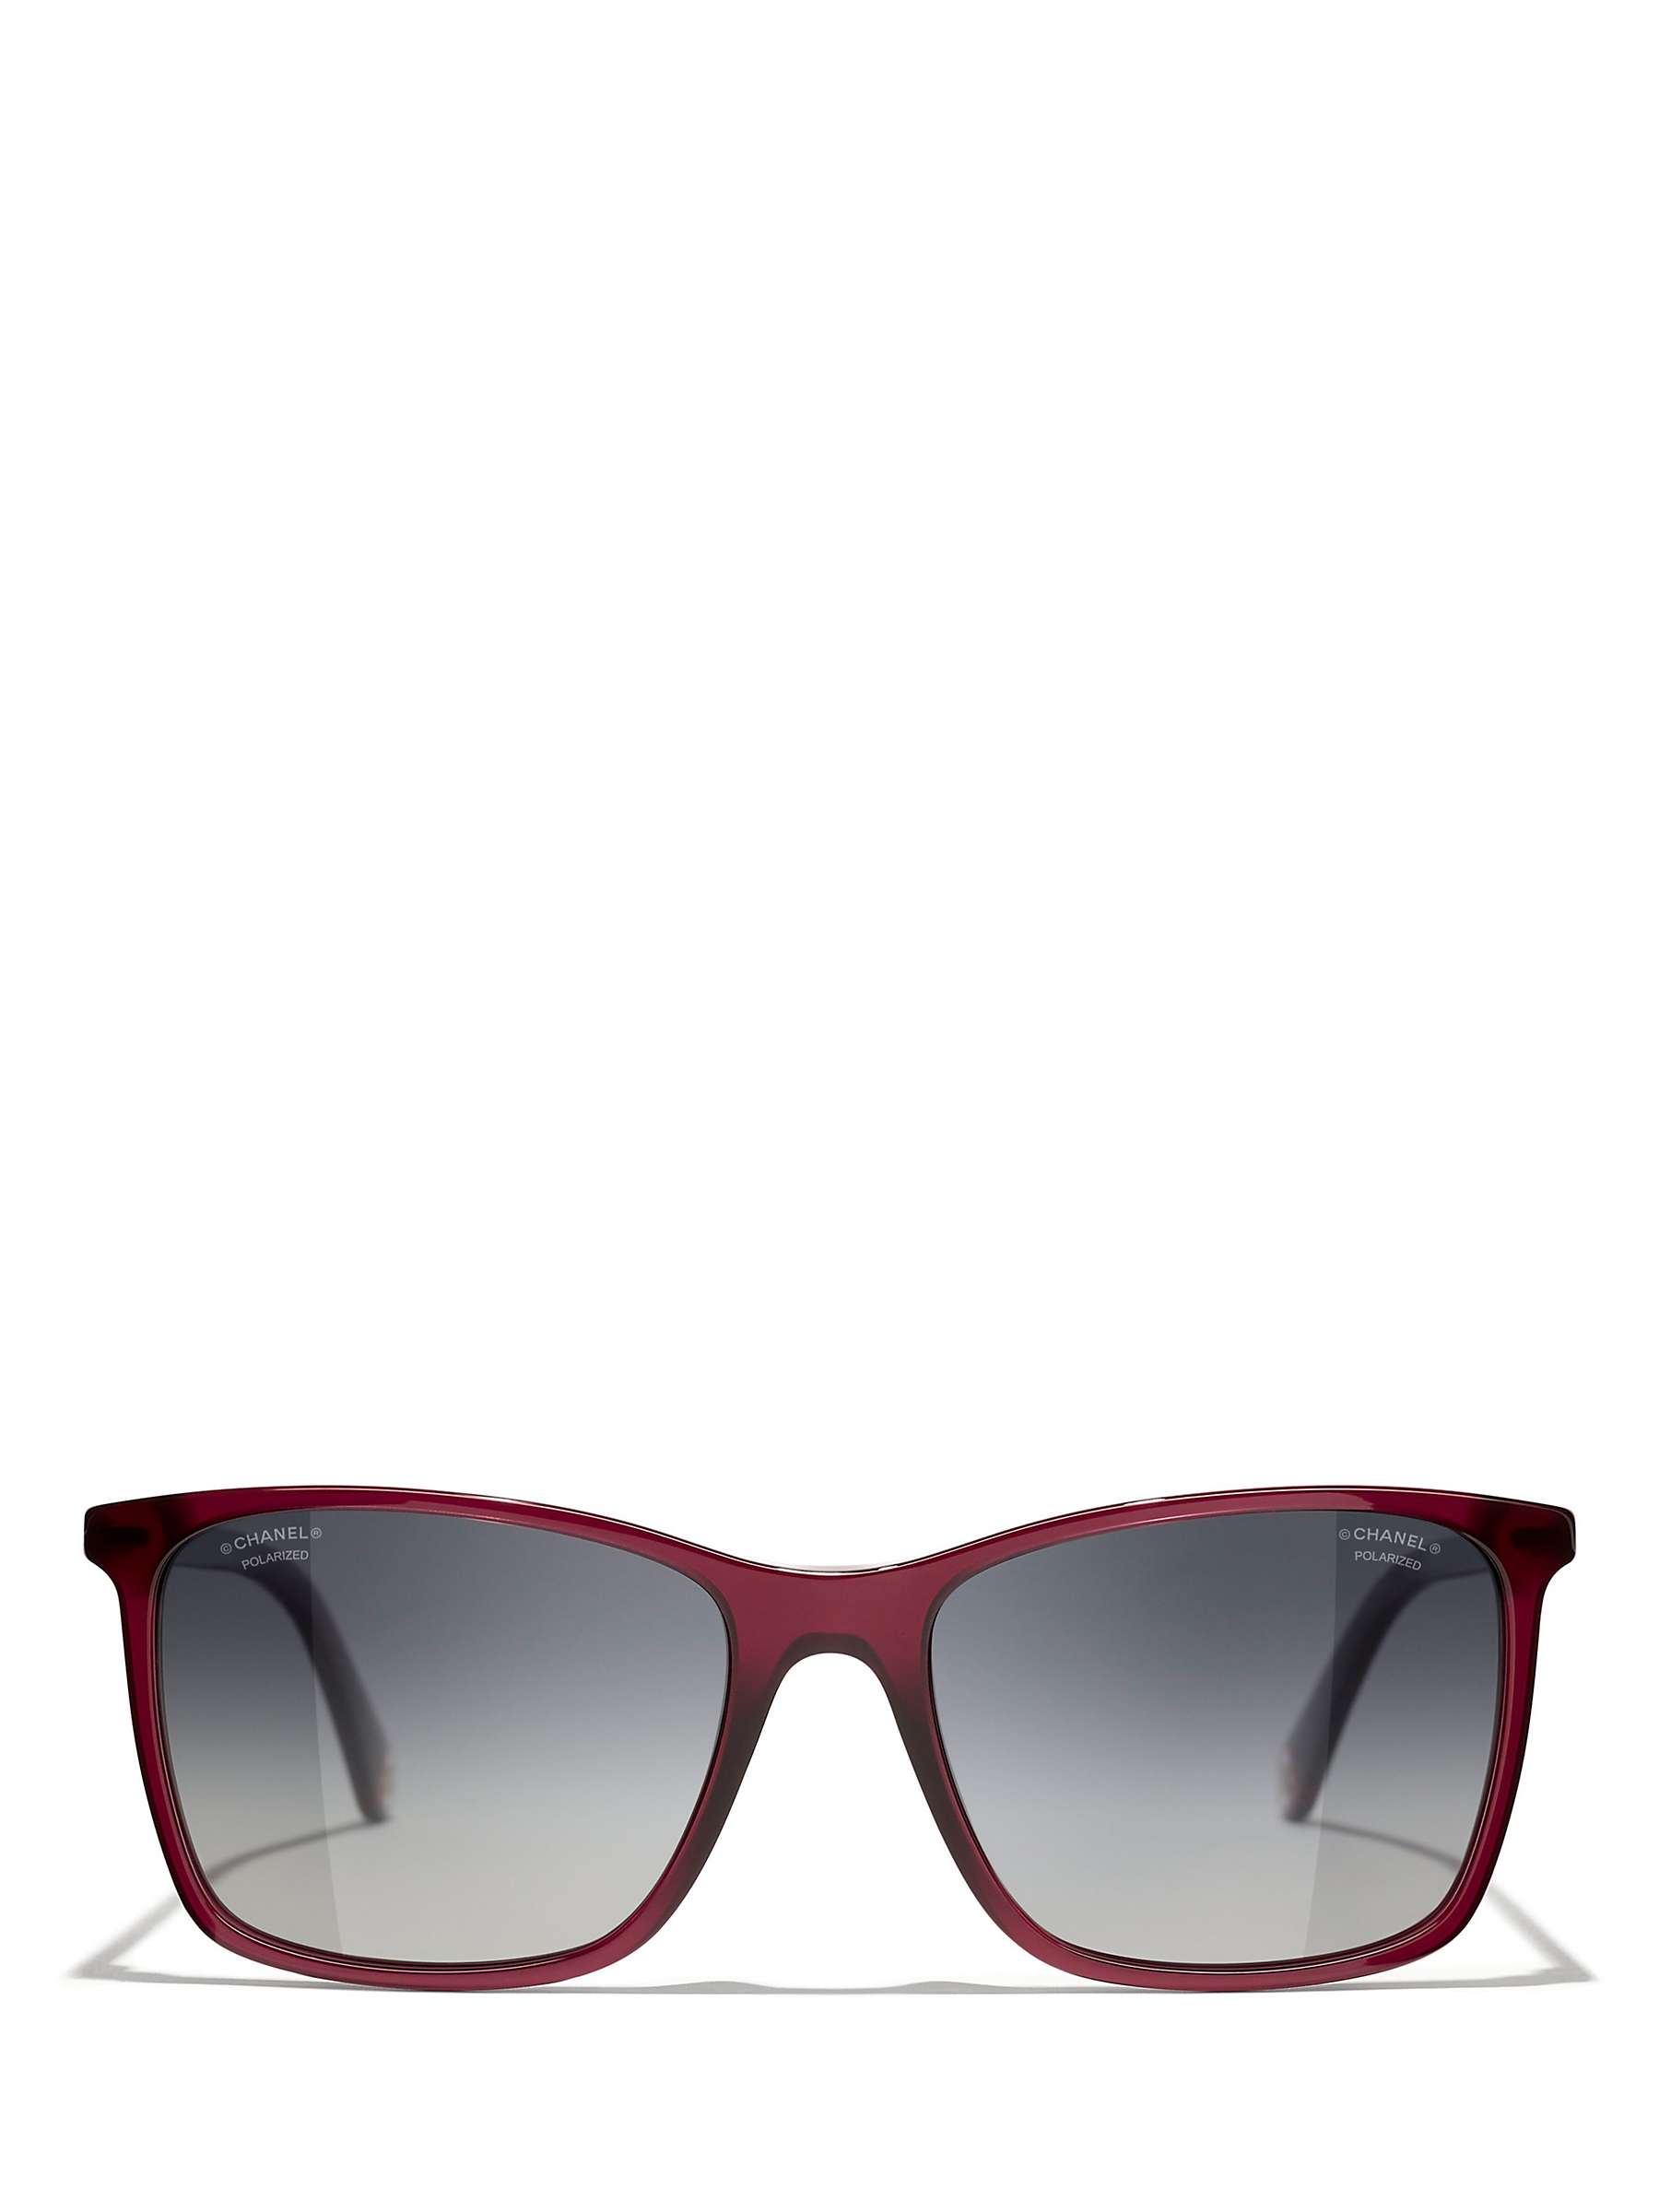 Buy CHANEL Rectangular Sunglasses CH5447 Dark Red/Grey Gradient Online at johnlewis.com